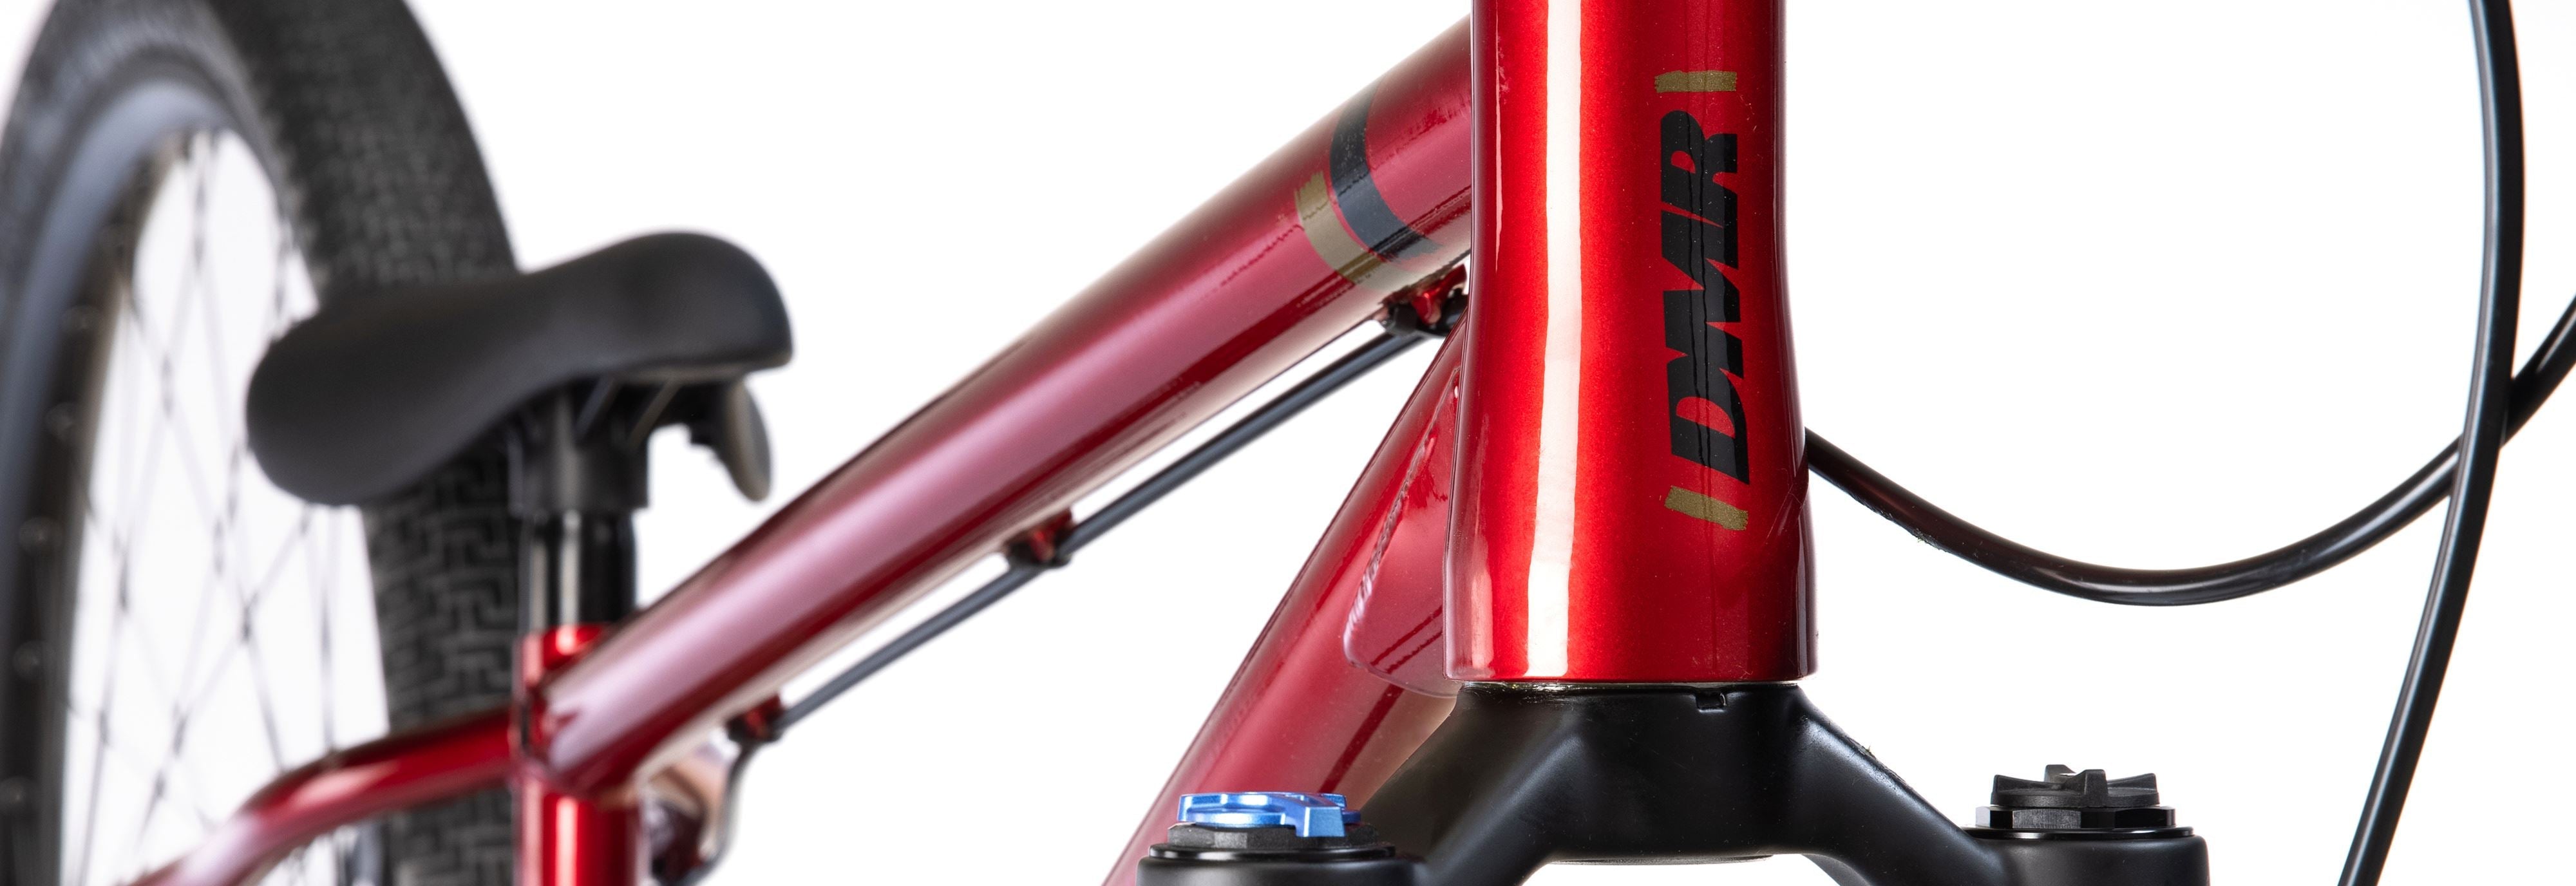 Bicicleta Dirt Jump DMR Sect Pro Color Rojo